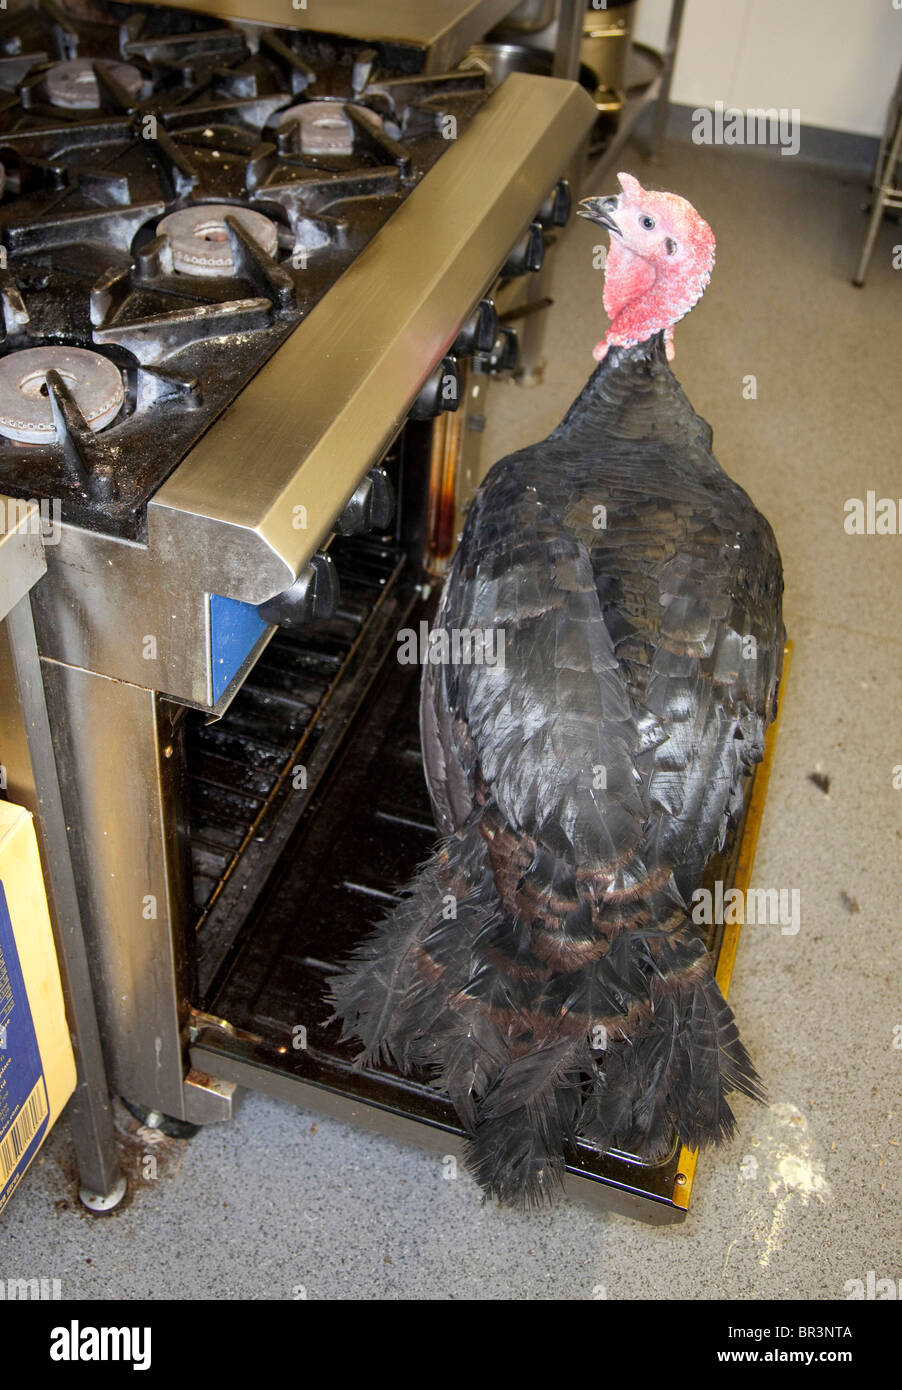 turkey oven animal bizarre Stock Photo